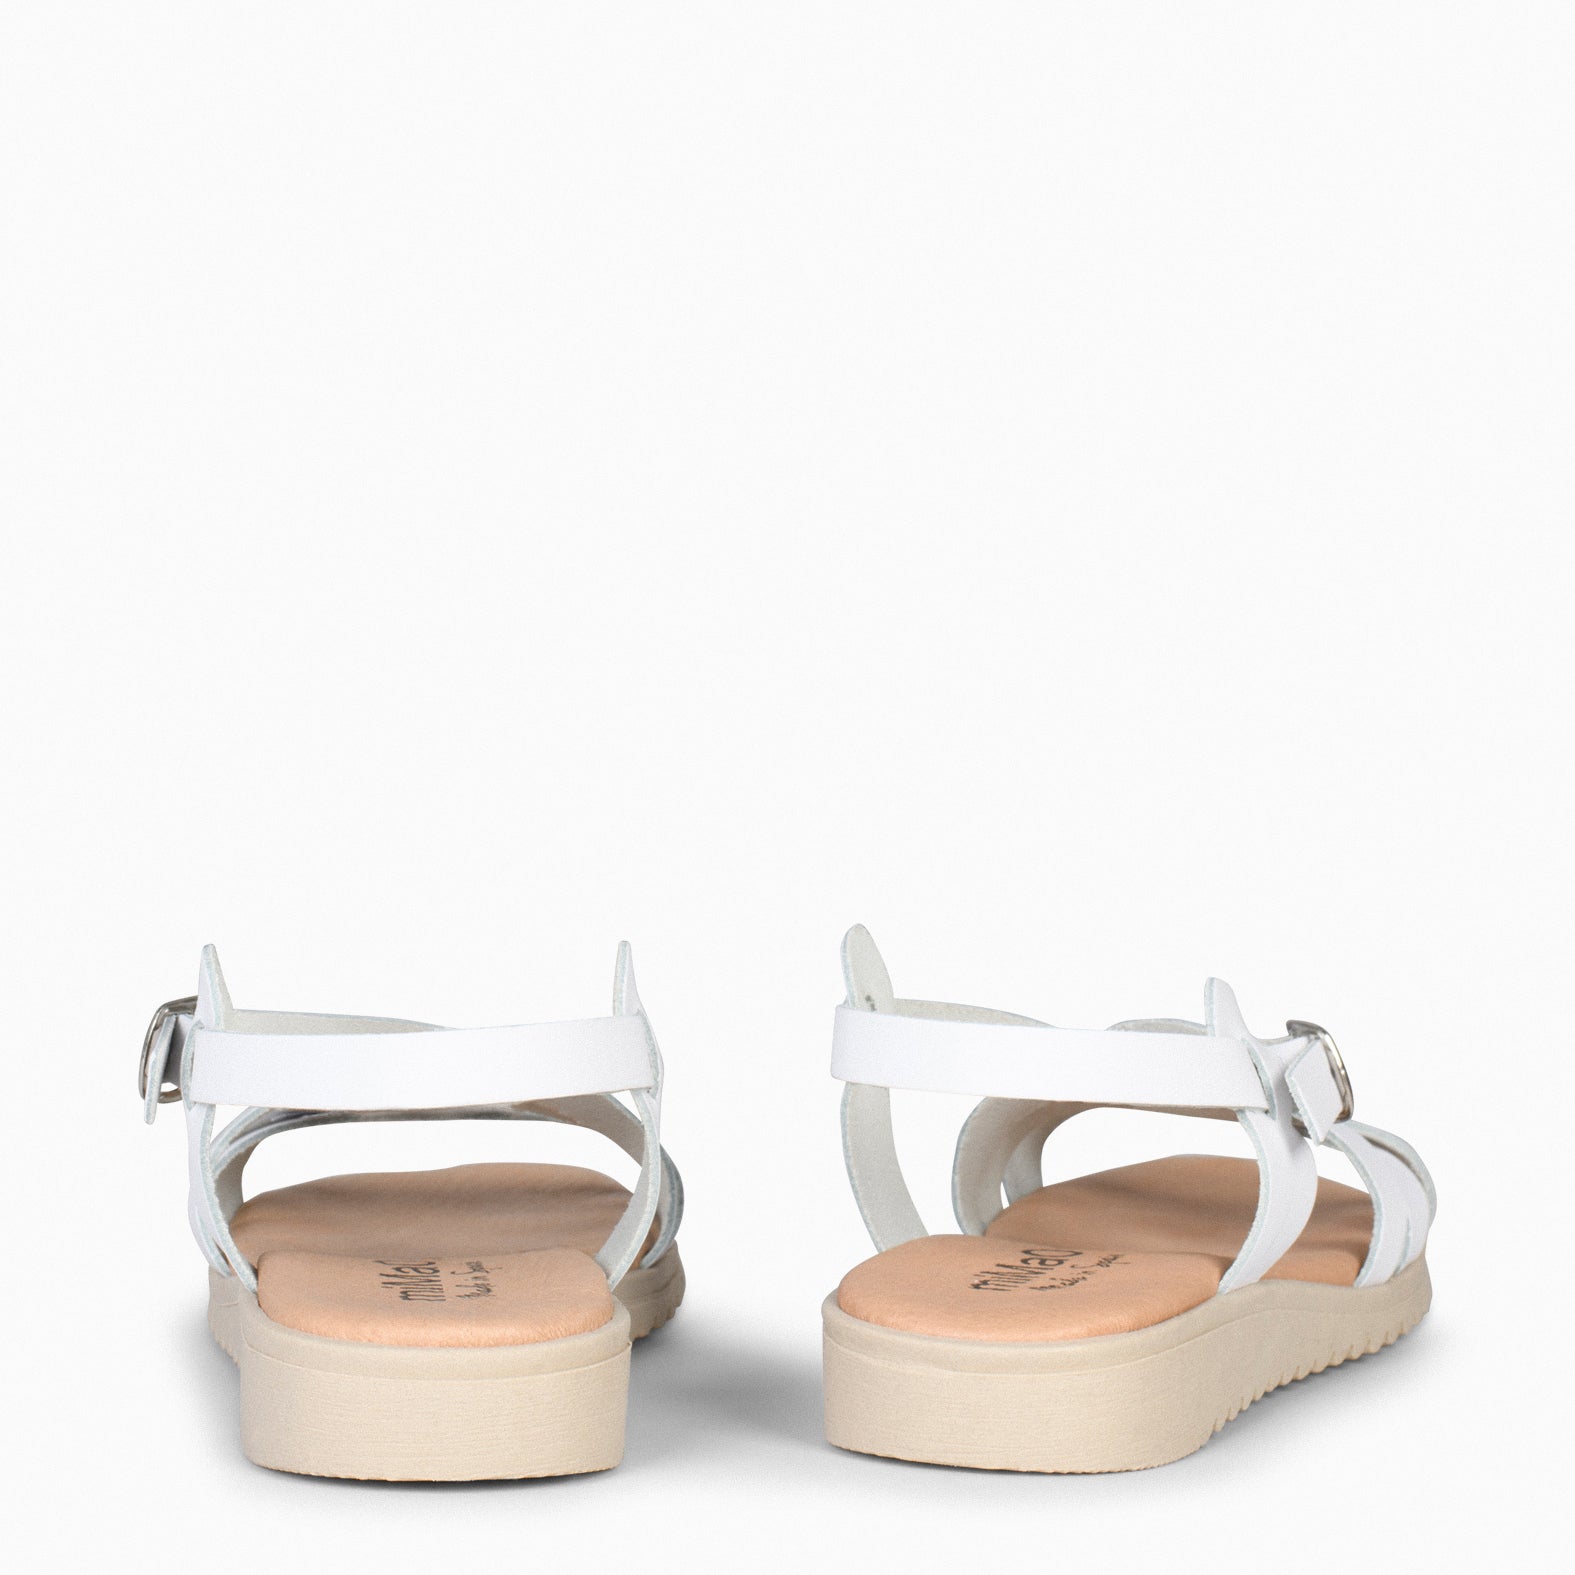 SPIRIT – WHITE Flat sandal with crossed strap